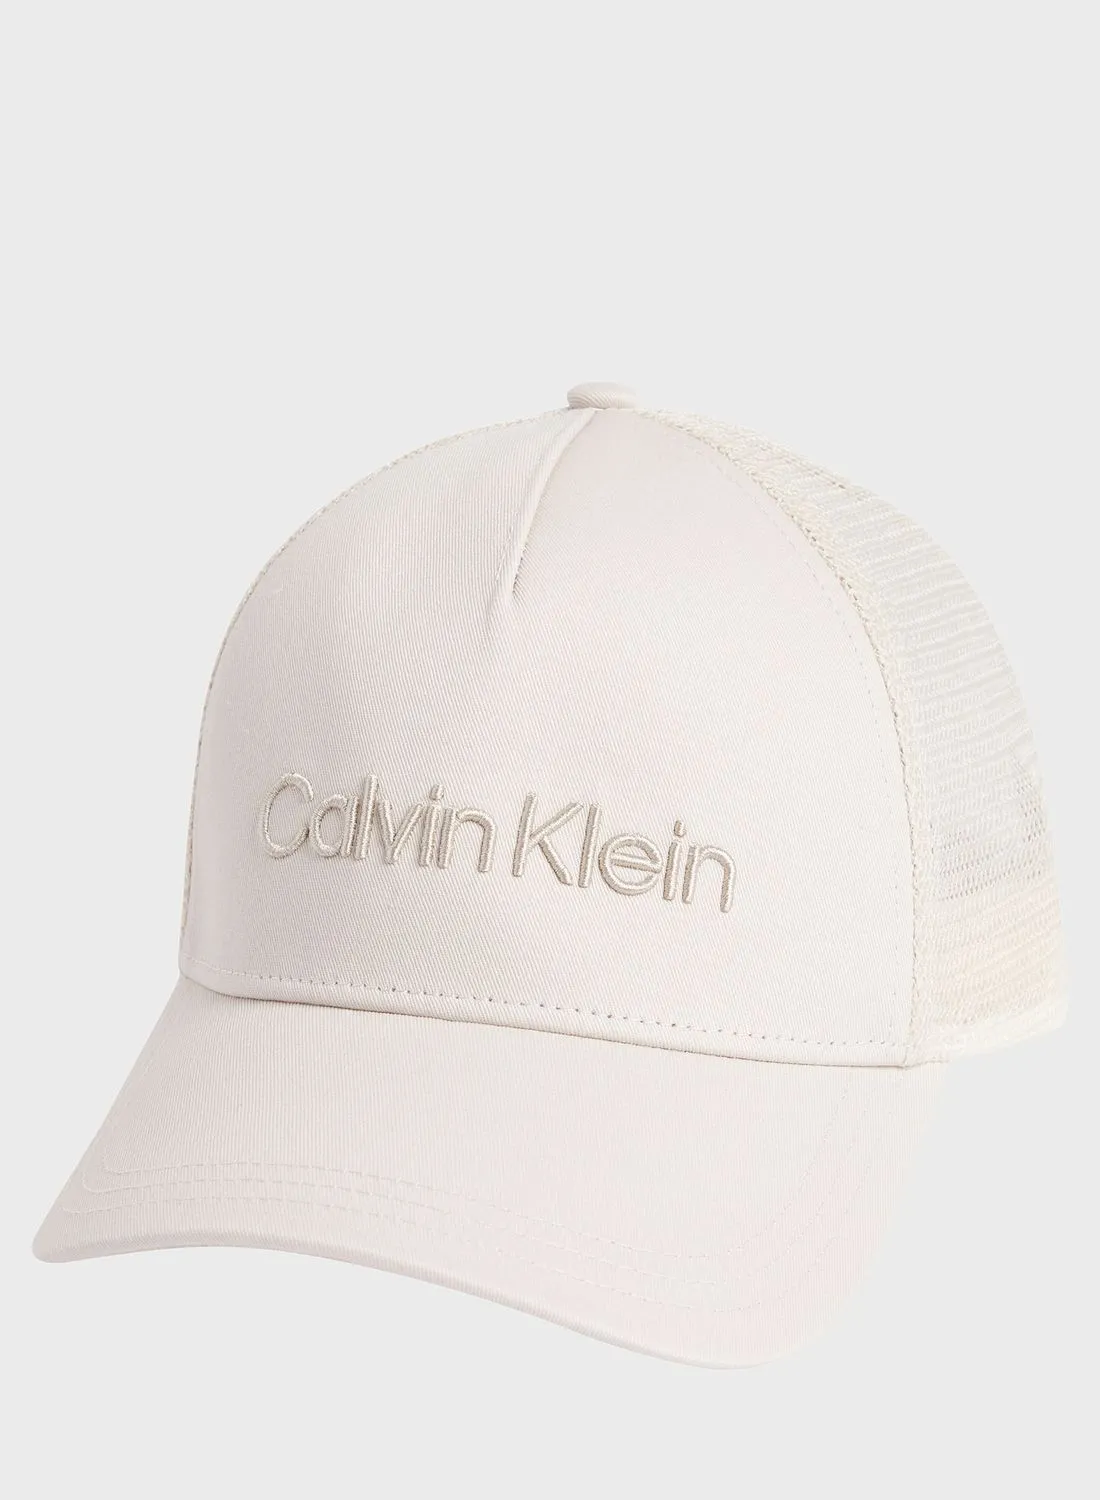 CALVIN KLEIN Logo Curved Peak Cap